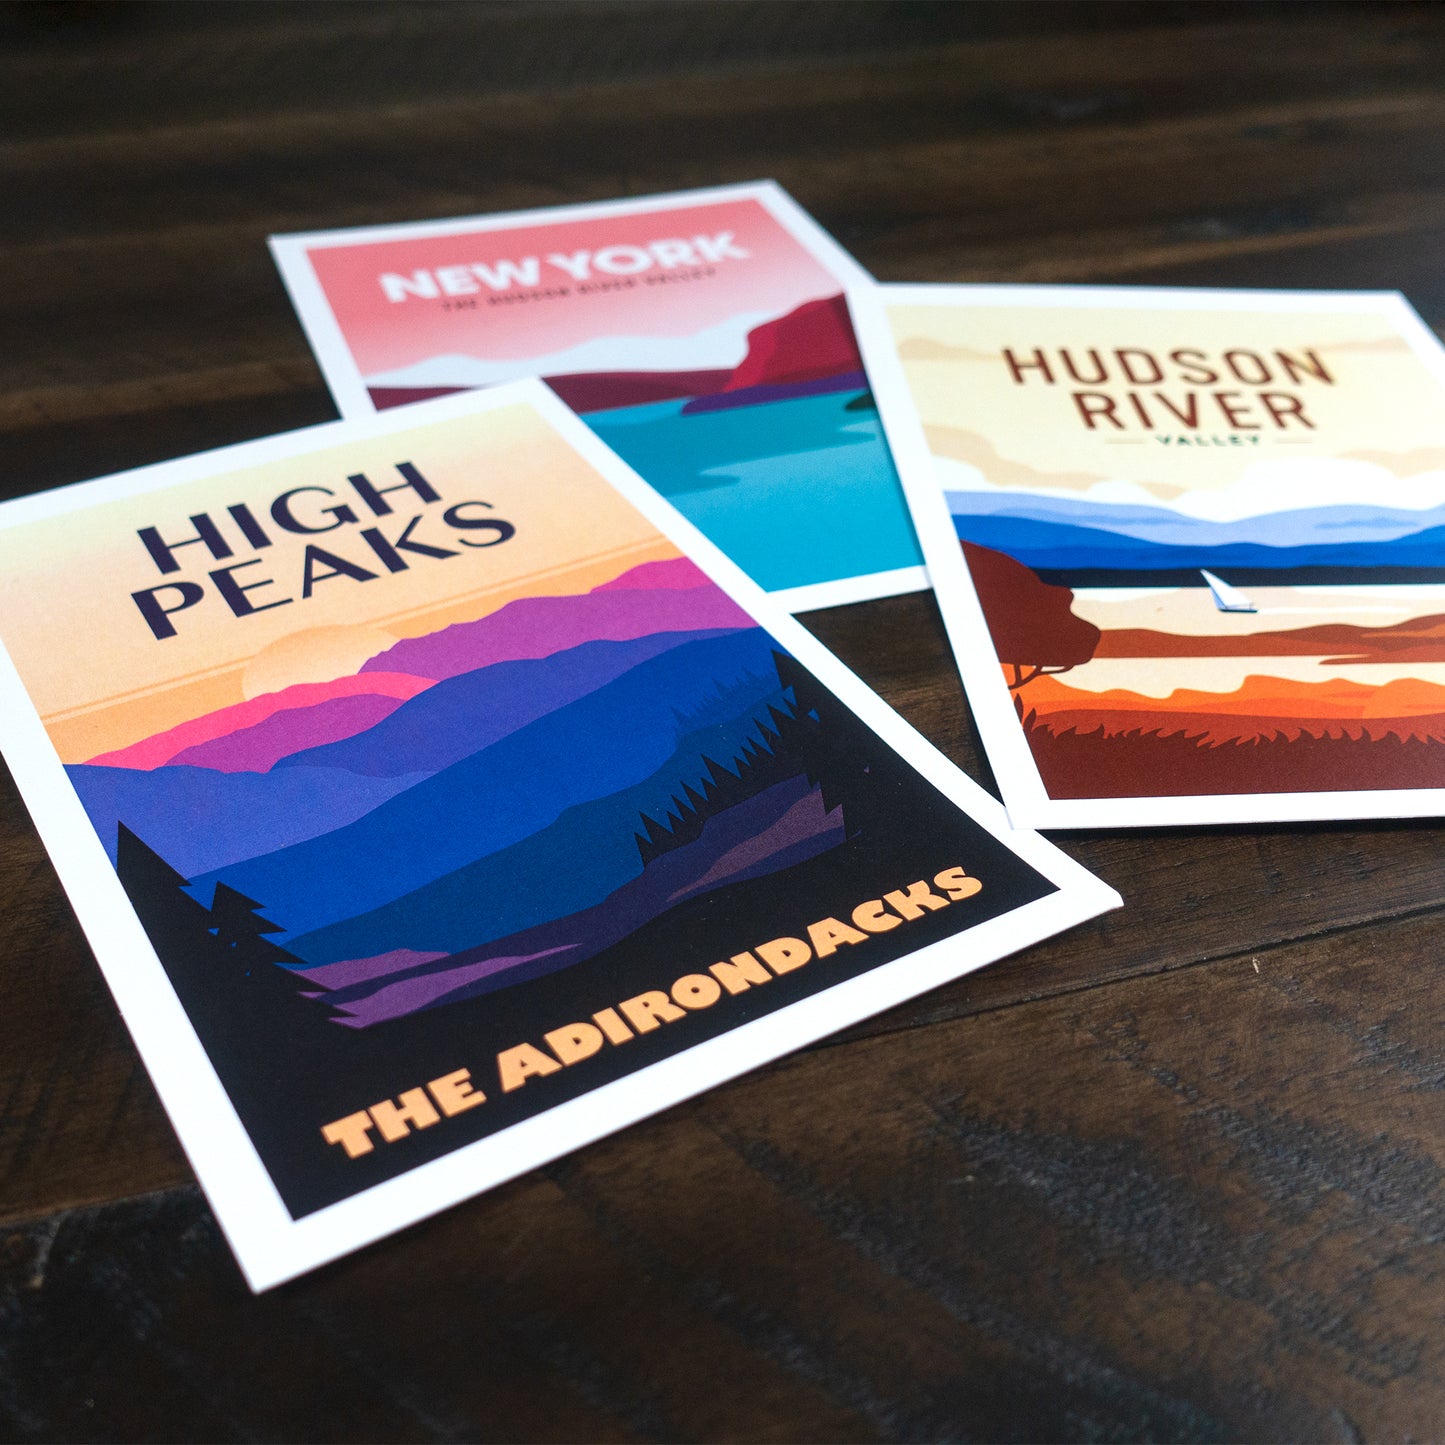 Top 3 Hudson River / Adirondacks Postcard Set